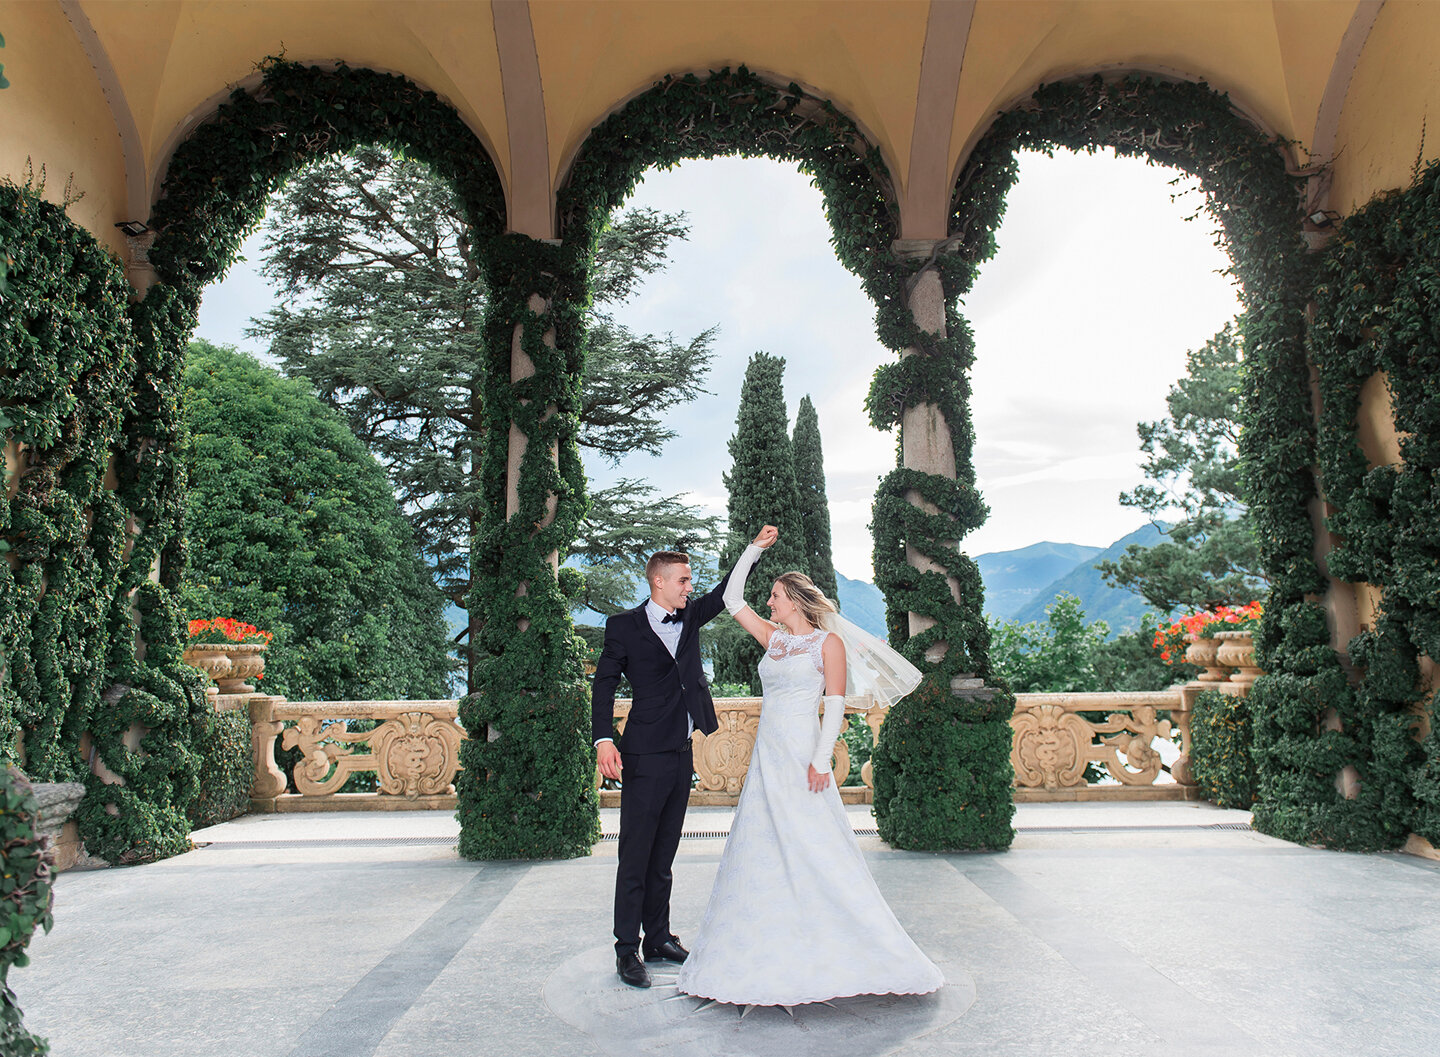 Bride and groom dancing on the villa's porch